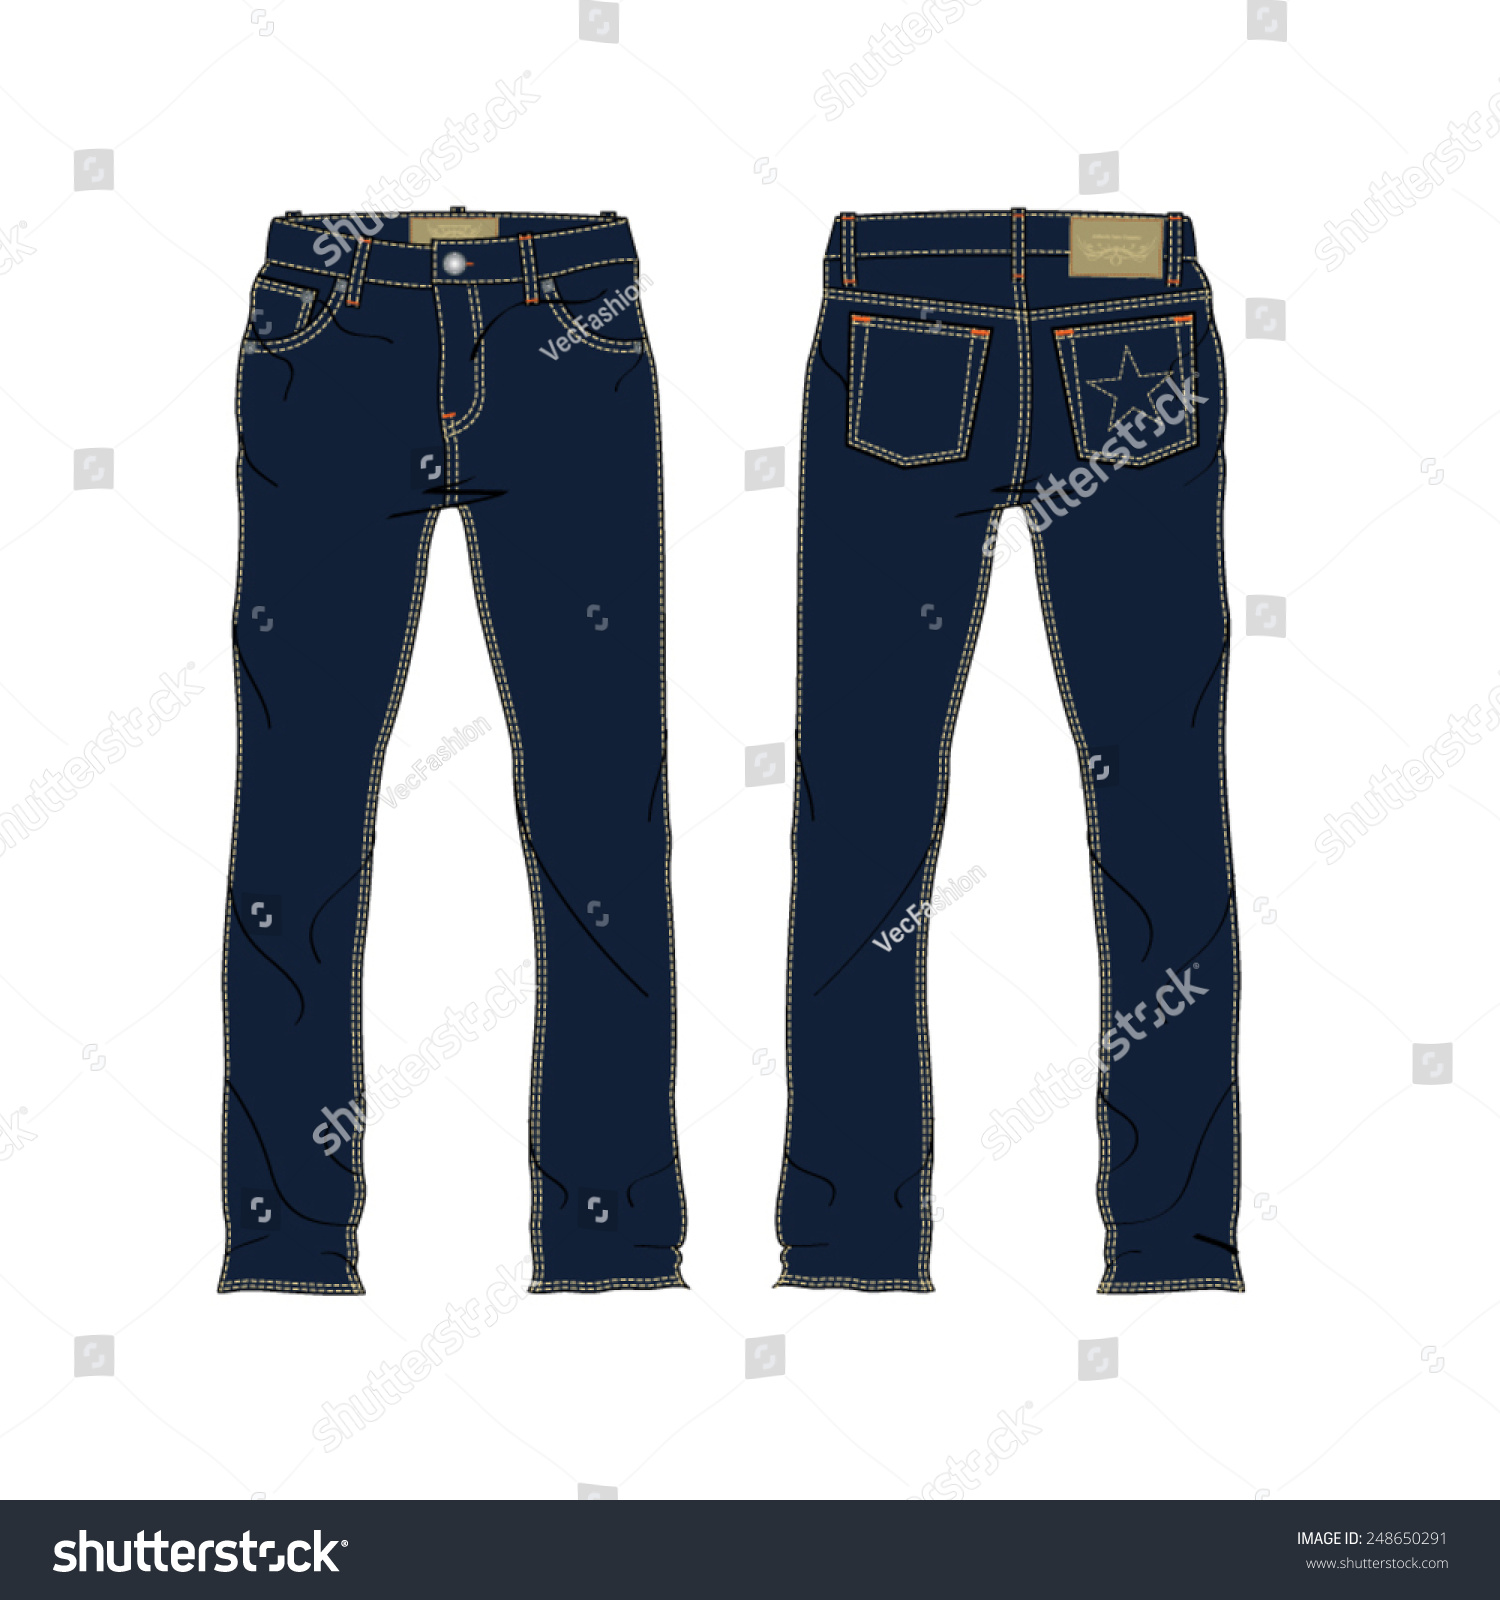 Men Denim Jeans Vector Template - 248650291 : Shutterstock